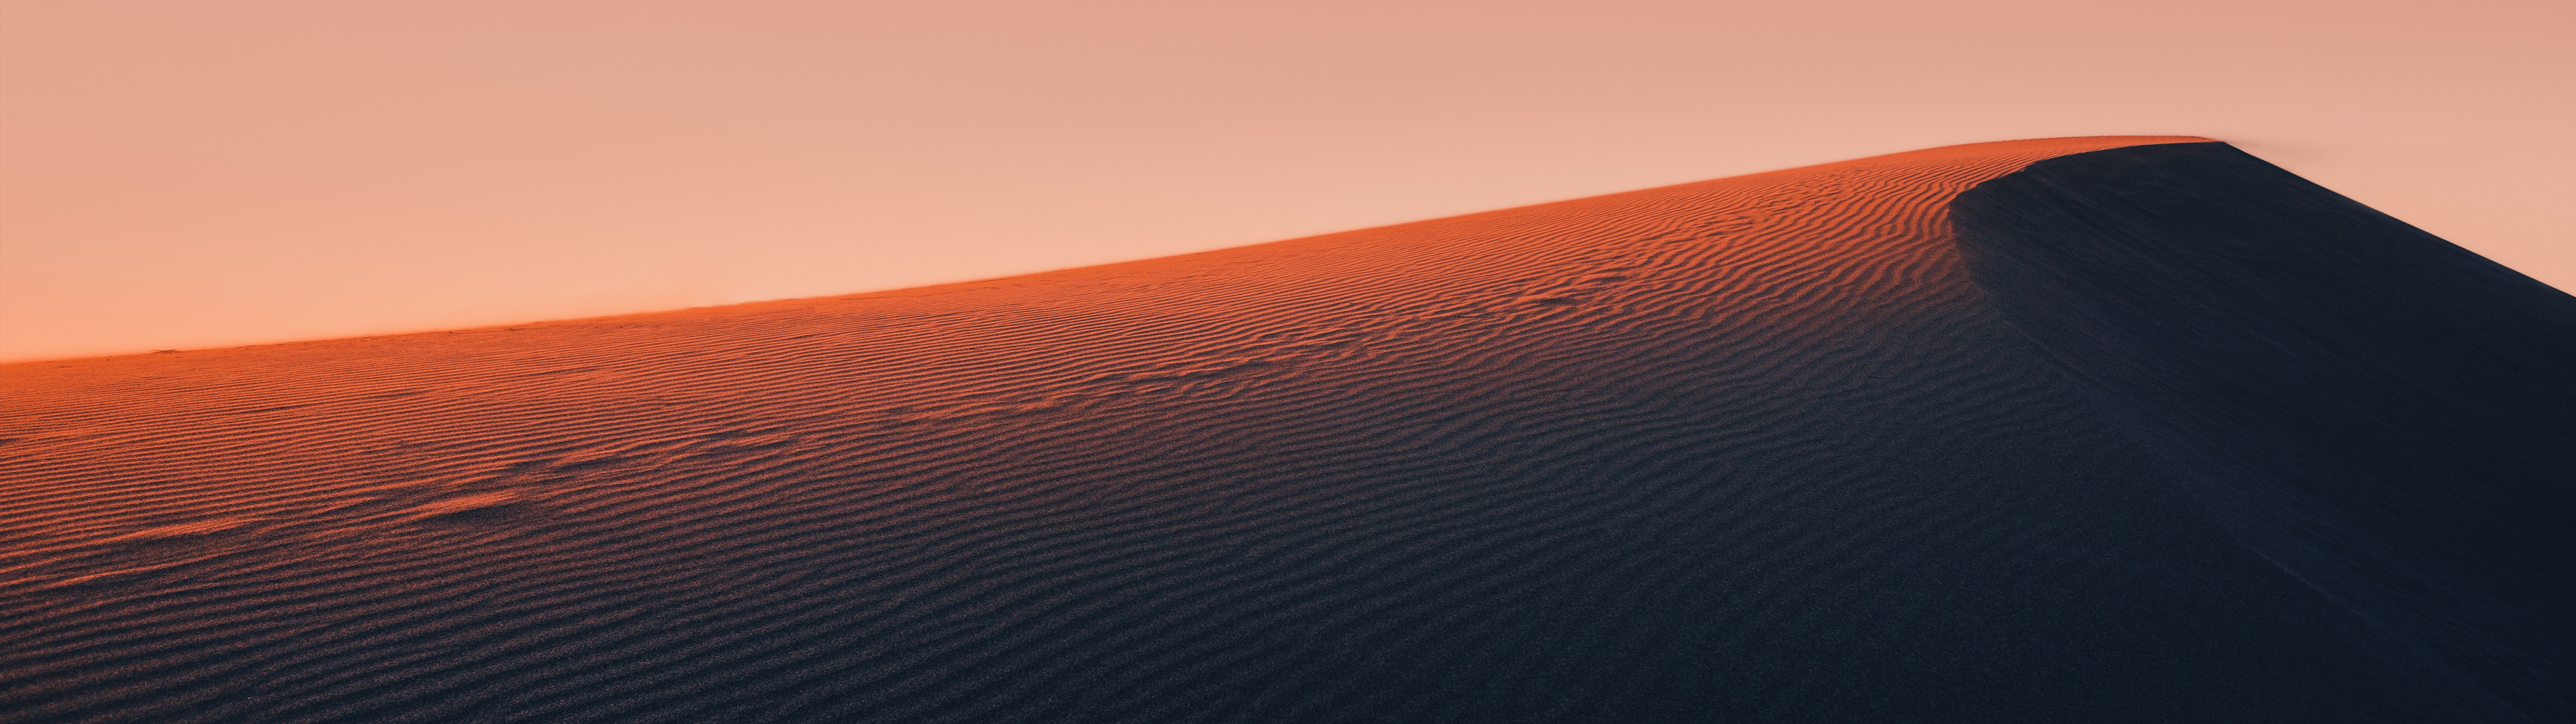 General 5120x1440 desert dunes landscape ultrawide